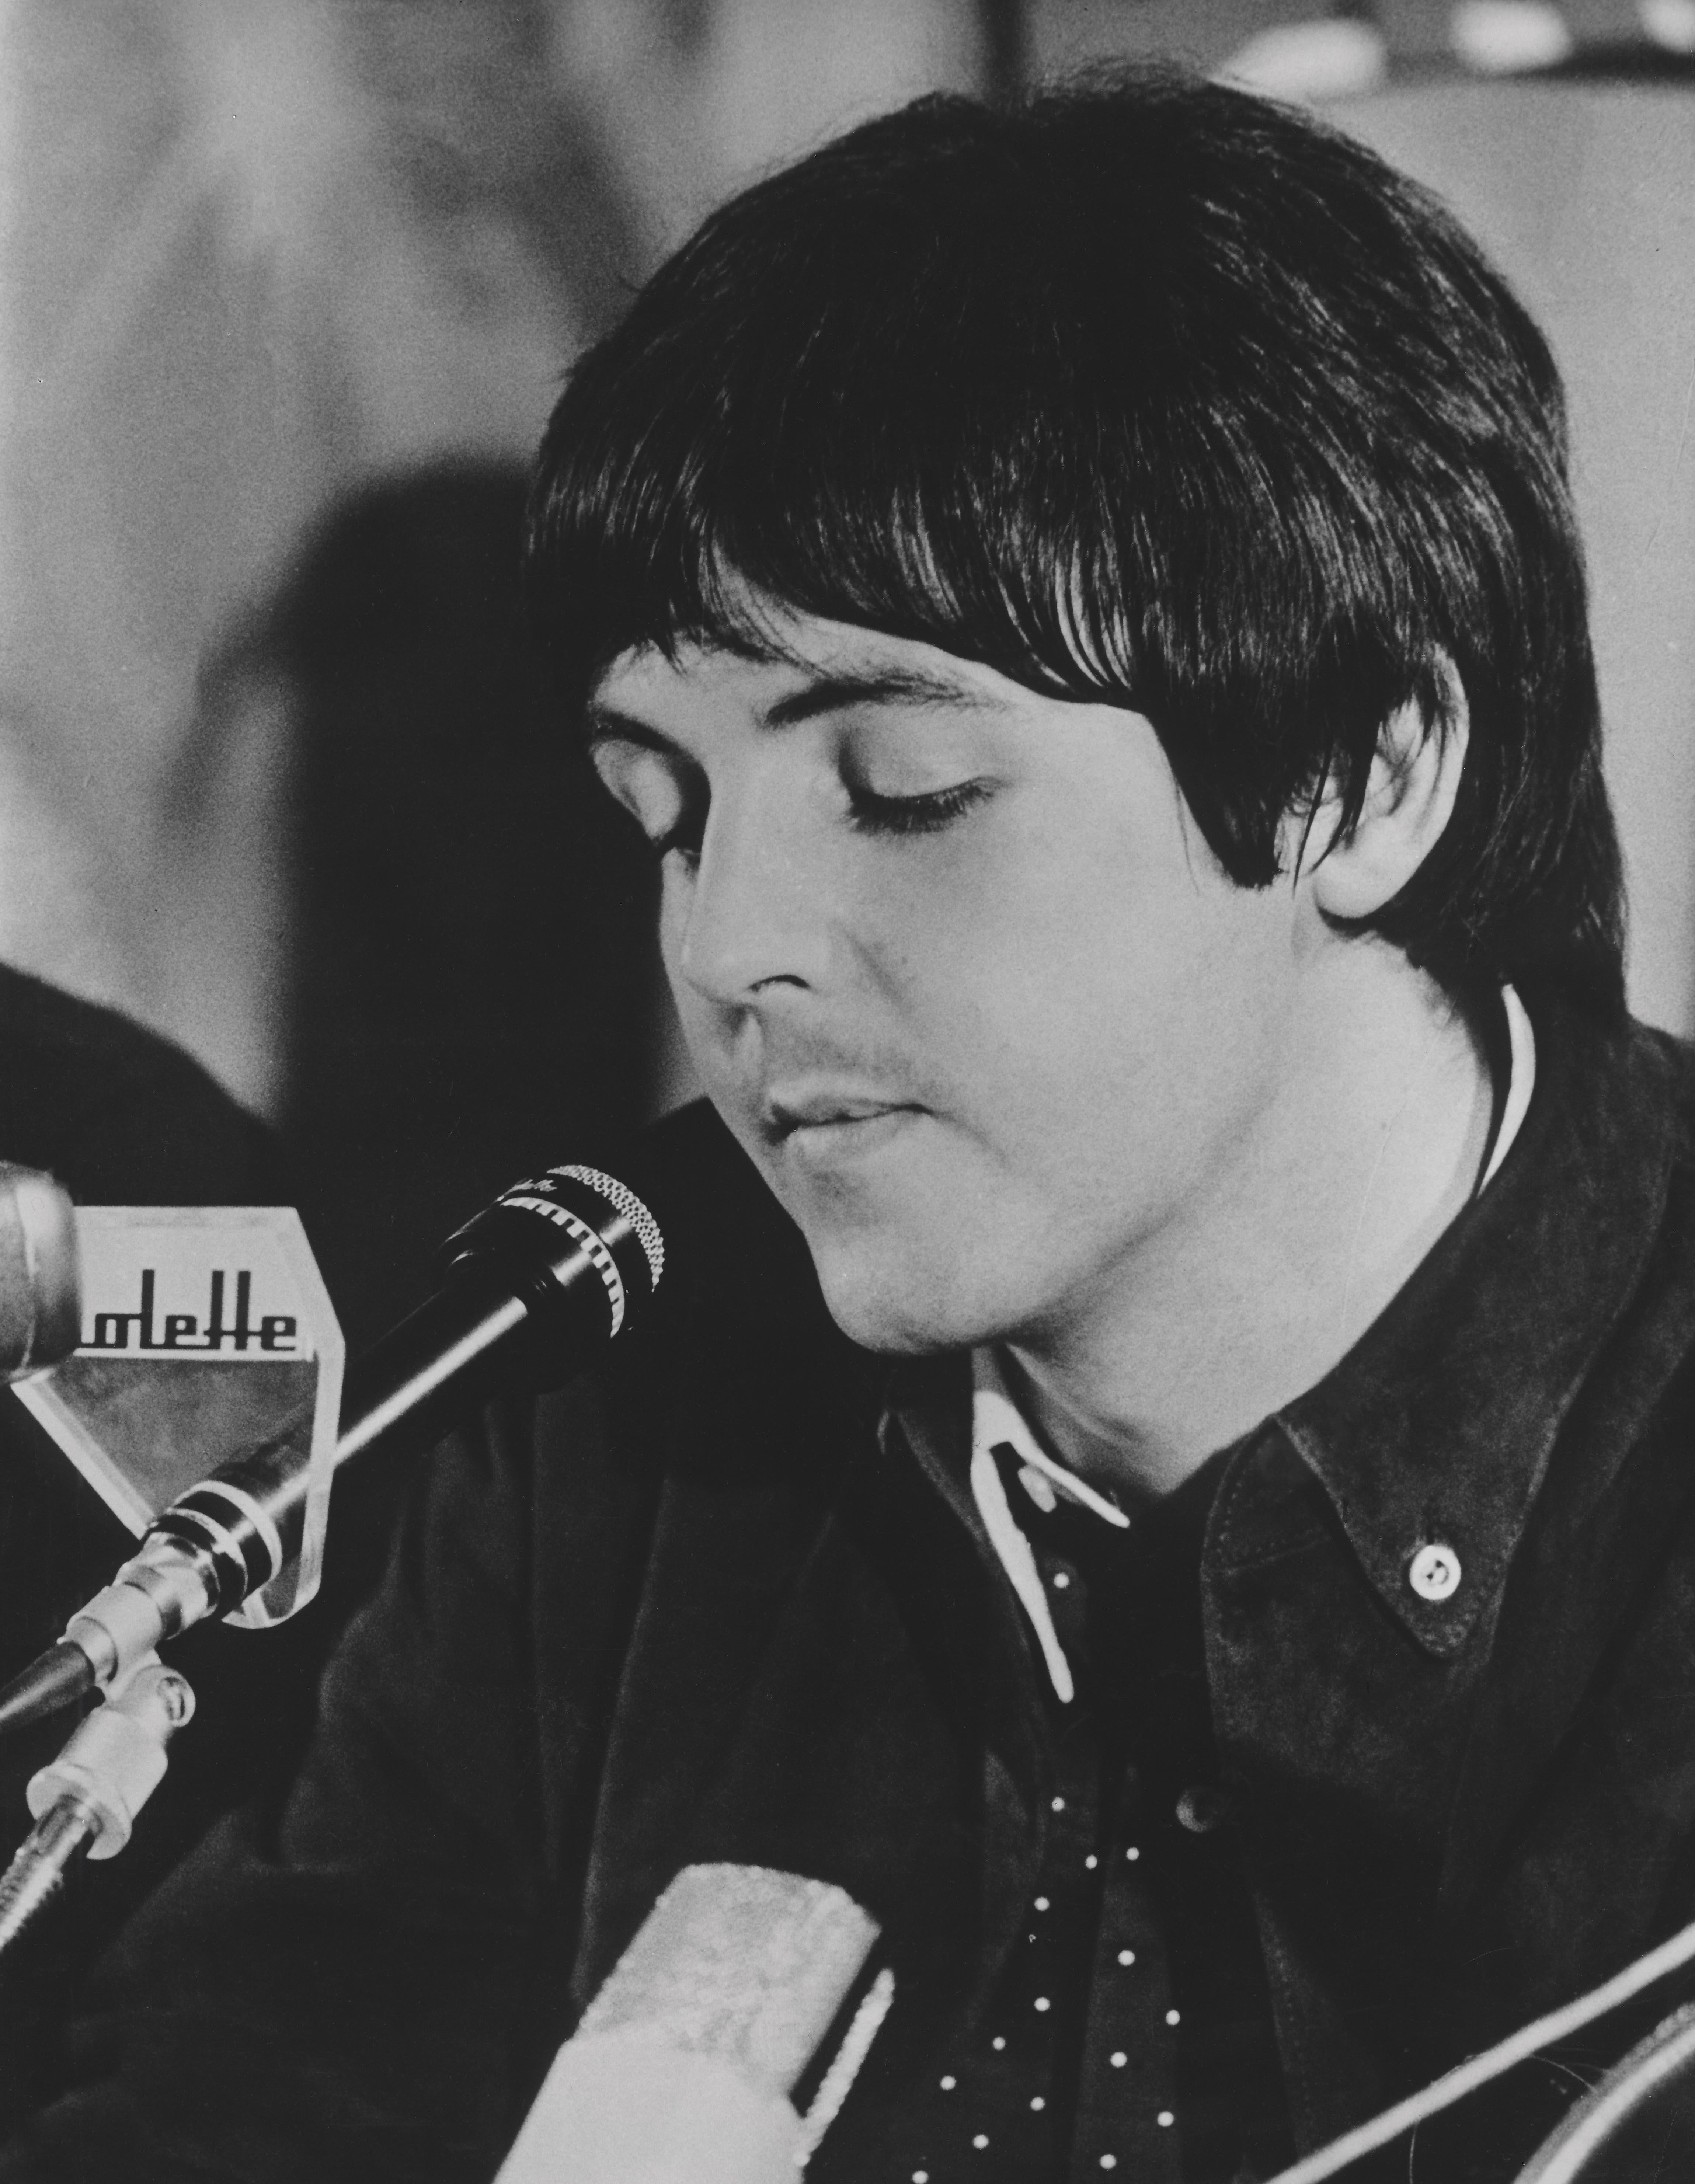 Unknown Portrait Photograph - Paul McCartney Being Interviewed Fine Art Print